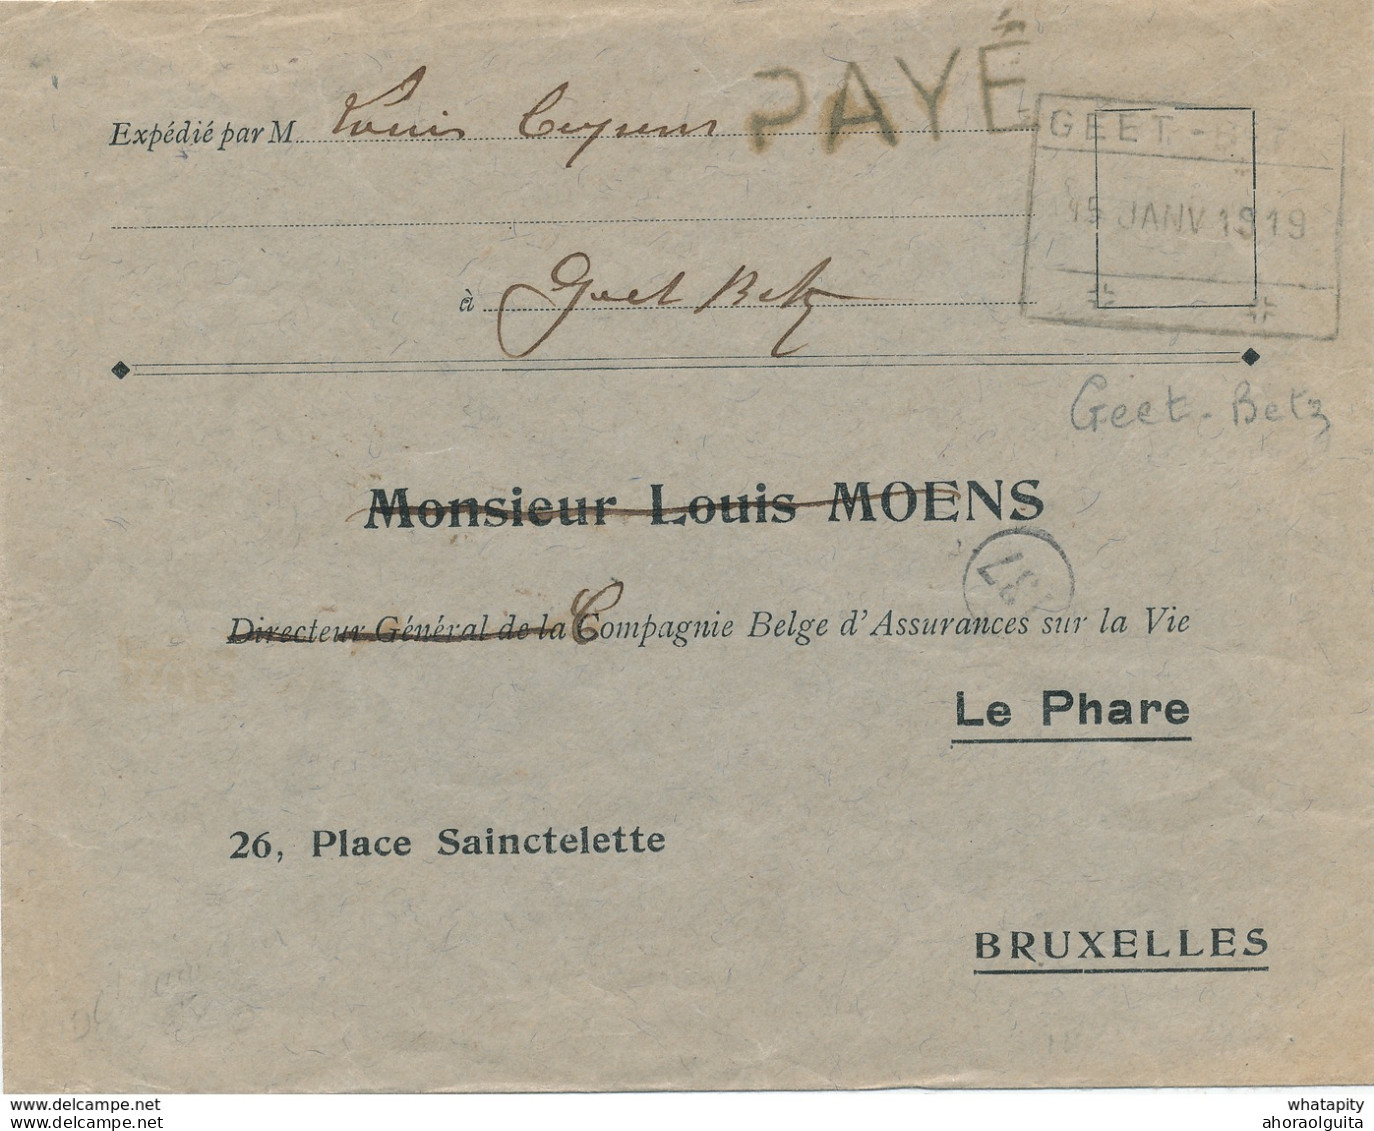 560/27 -  Enveloppe Port PAYE - Cachet De FORTUNE Rectangle Chemin De Fer GEET BETZ 1919 - Foruna (1919)